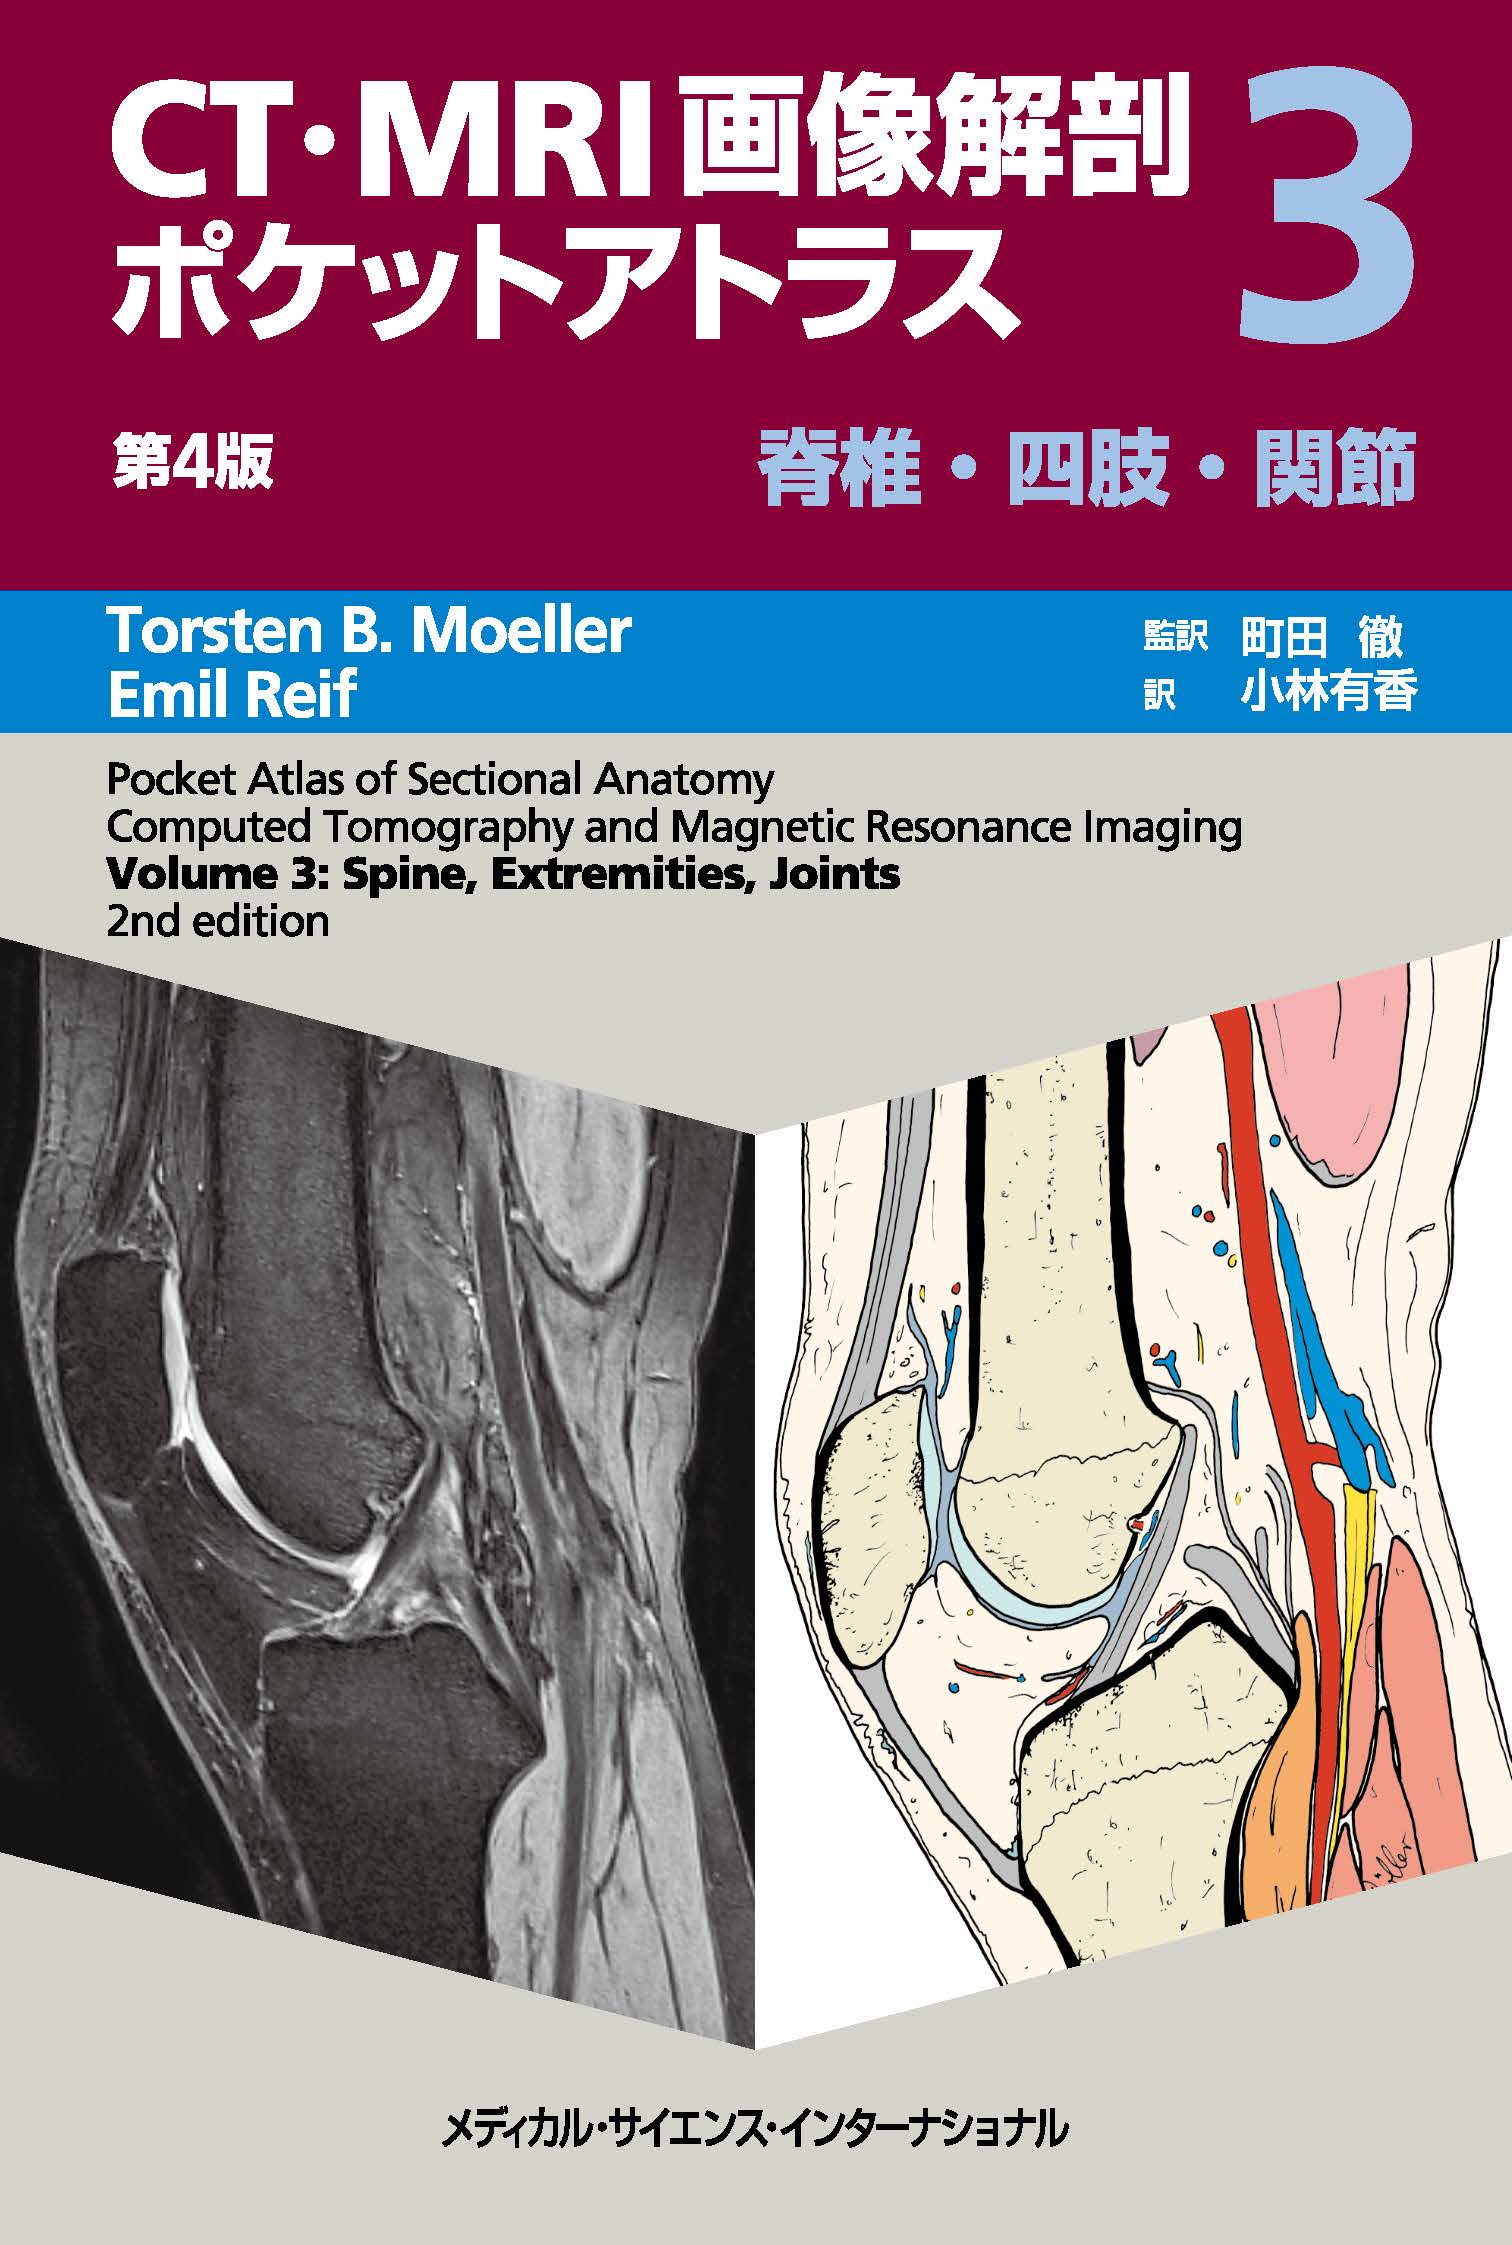 CT・MRI画像解剖ポケットアトラス 第4版 3巻【電子版】 | 医書.jp